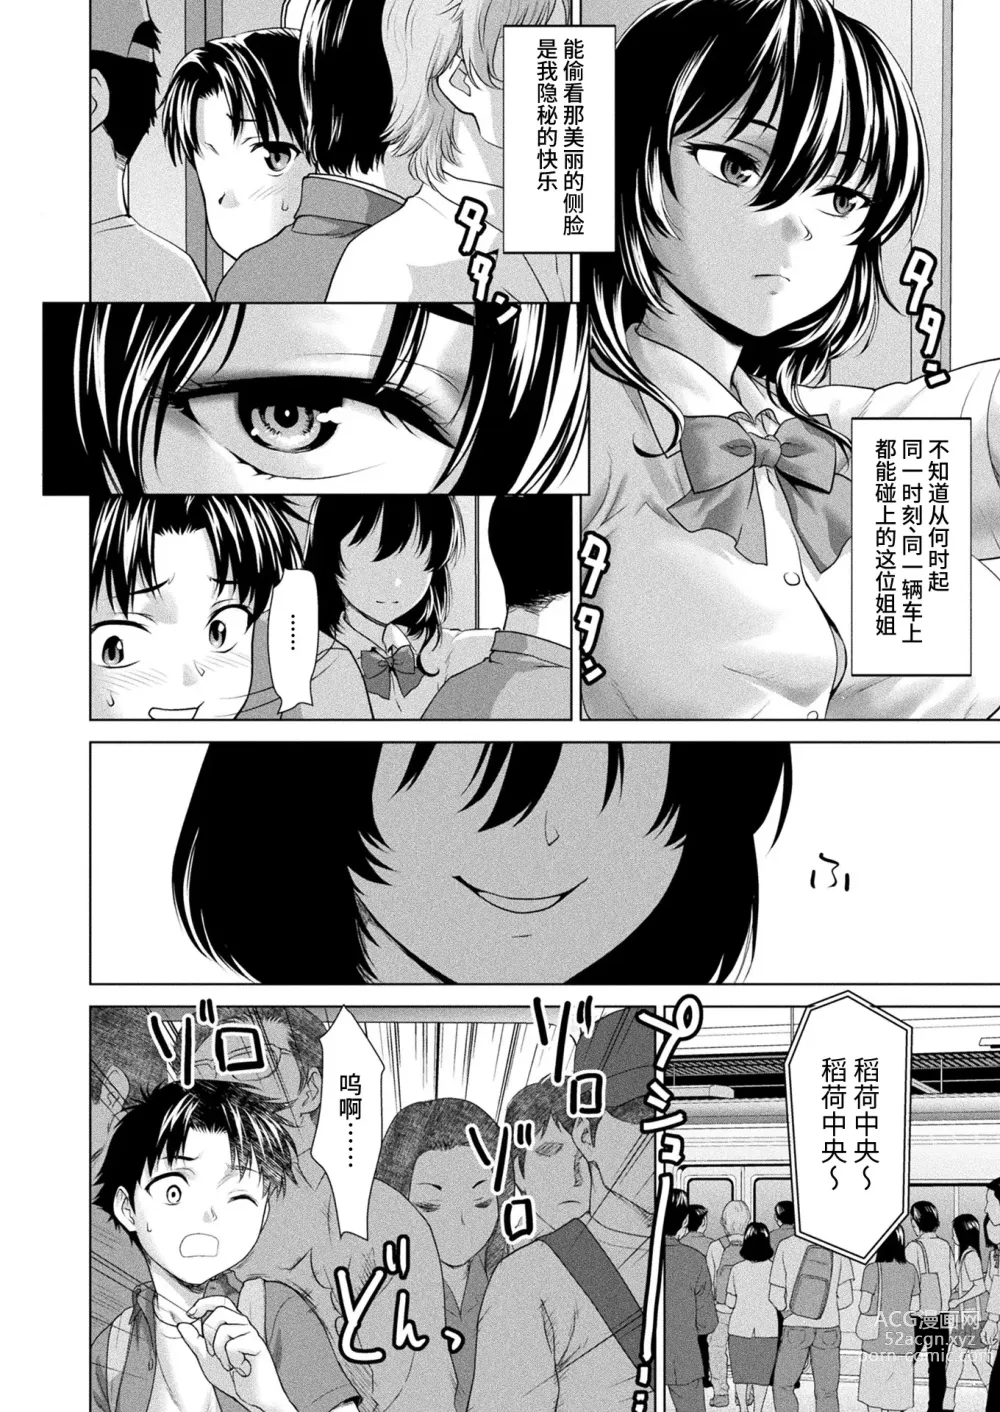 Page 2 of manga Kitsune Eki